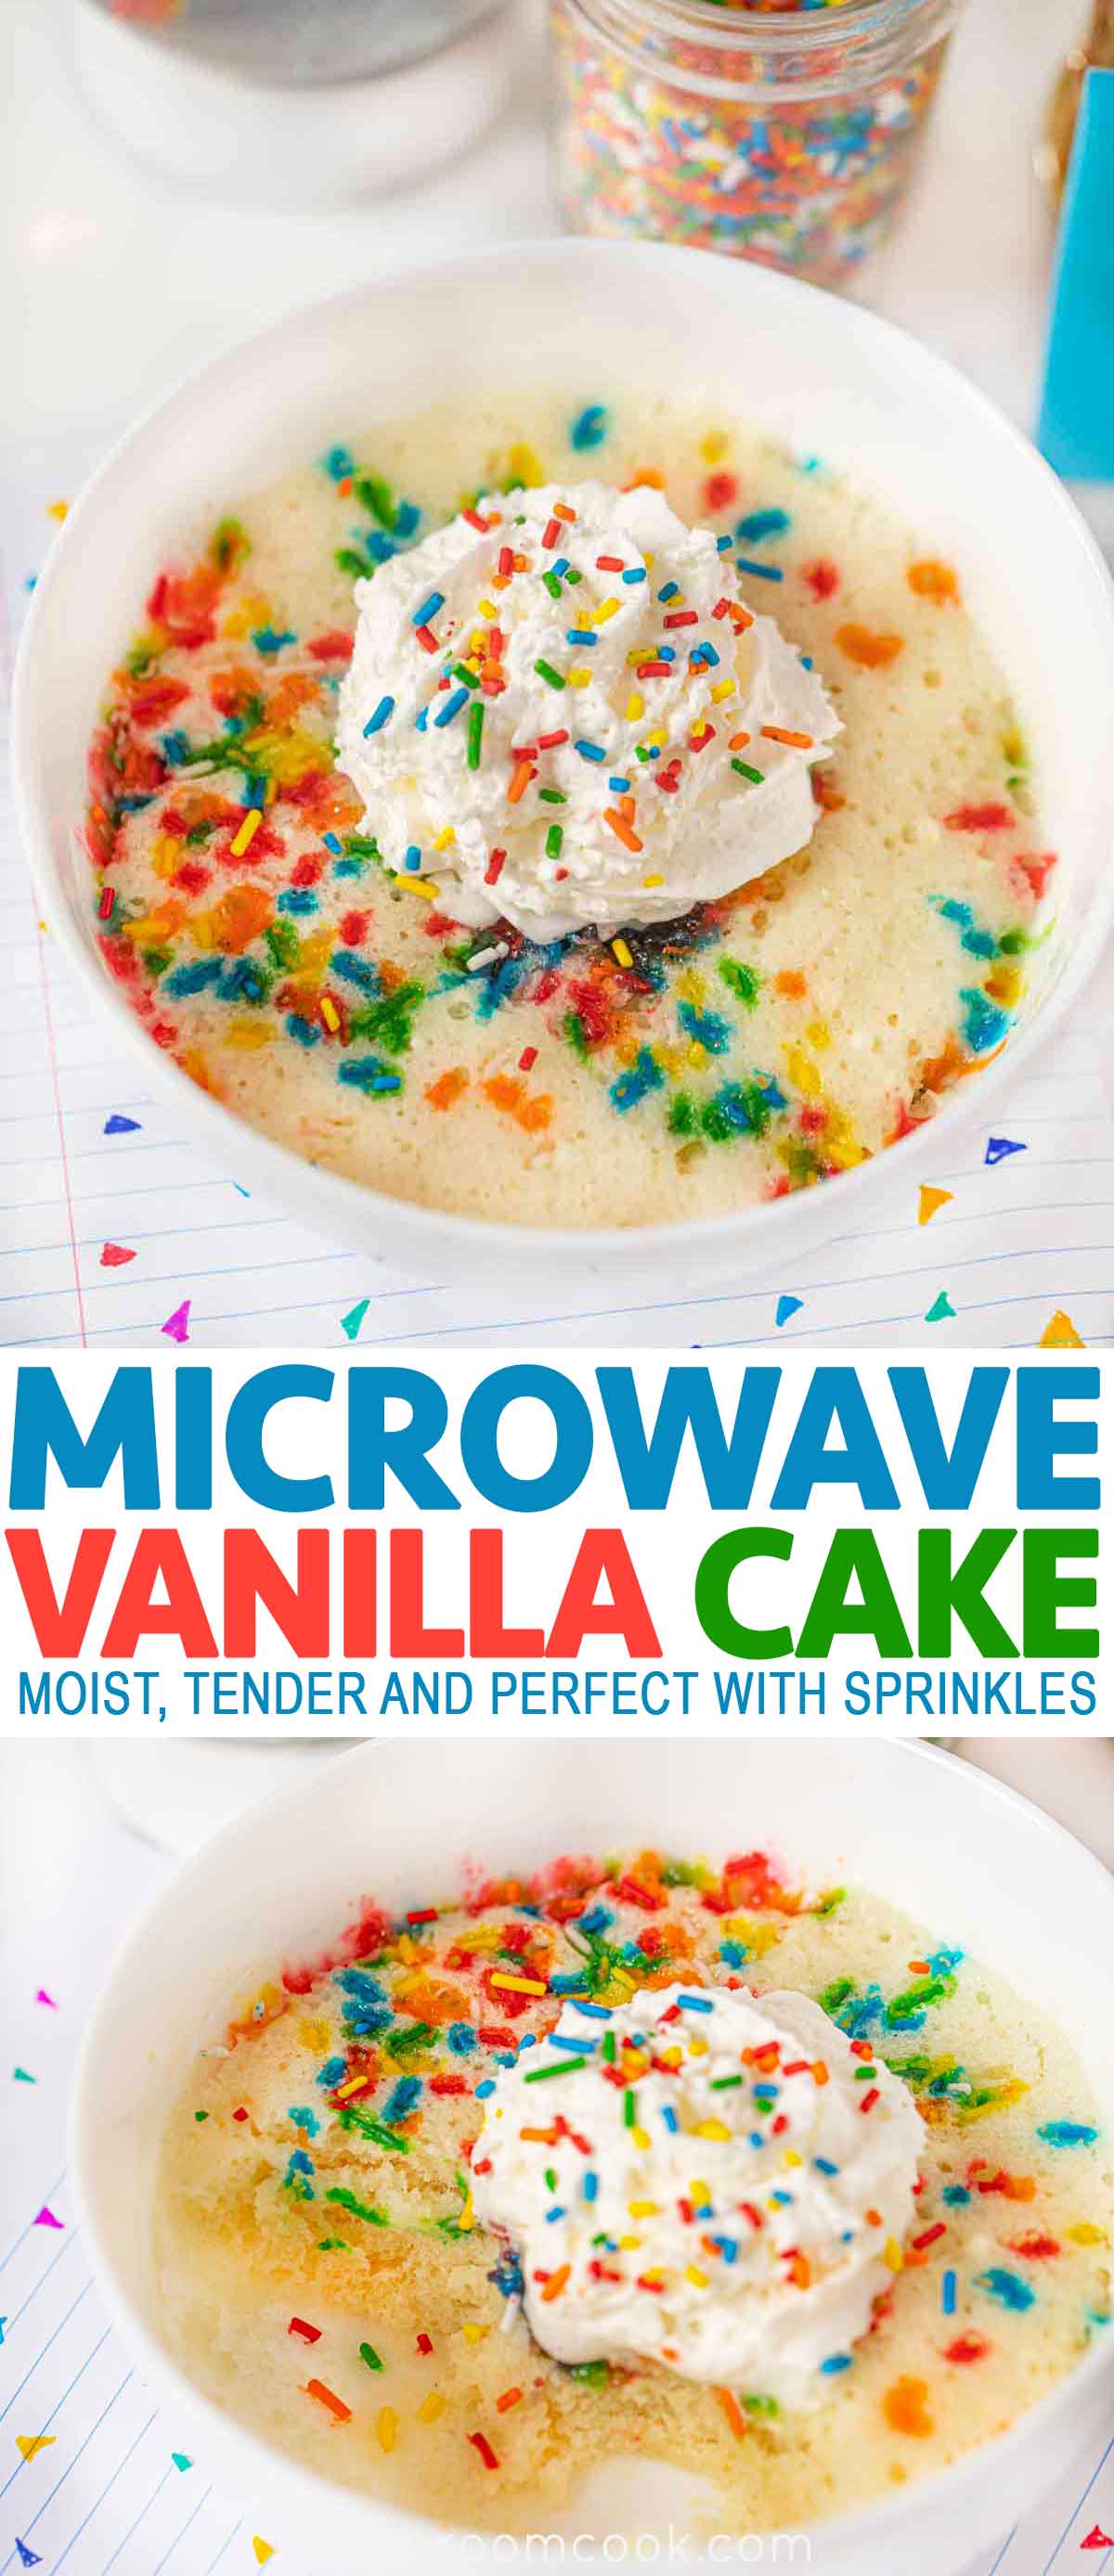 Vanilla Cake with Sprinkles